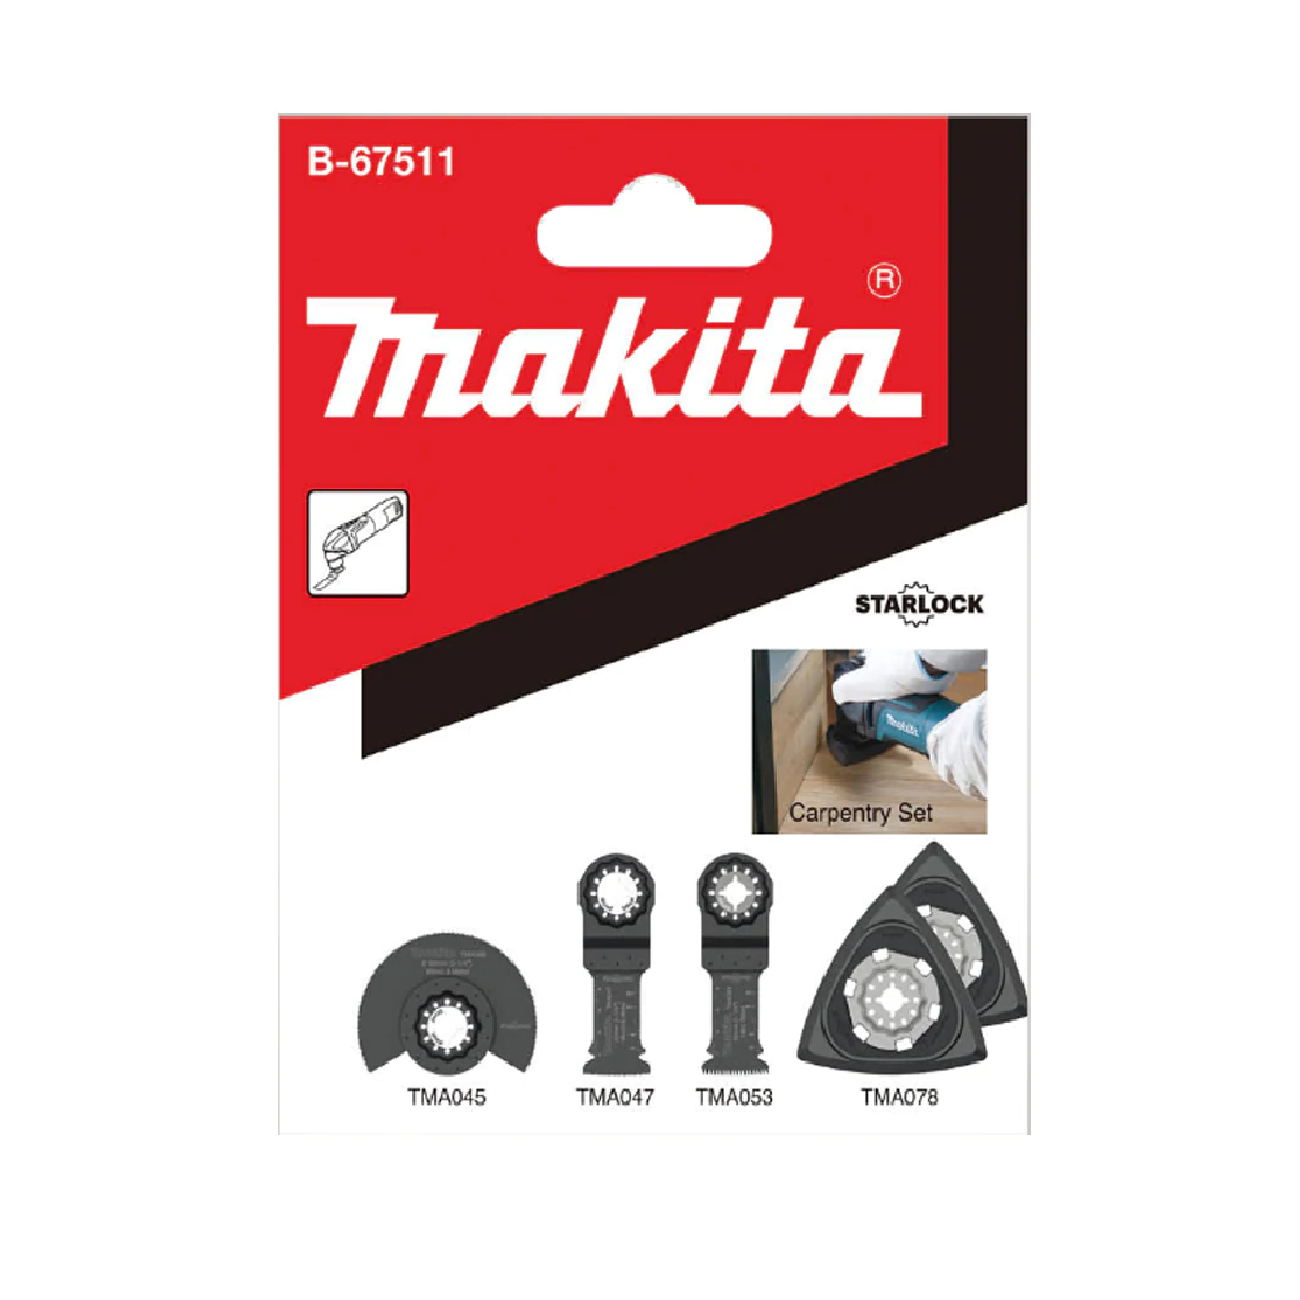 Makita B-67511 Oscillating Blade Set For Use With Multi-Cutter STARLOCK 5PC/Set